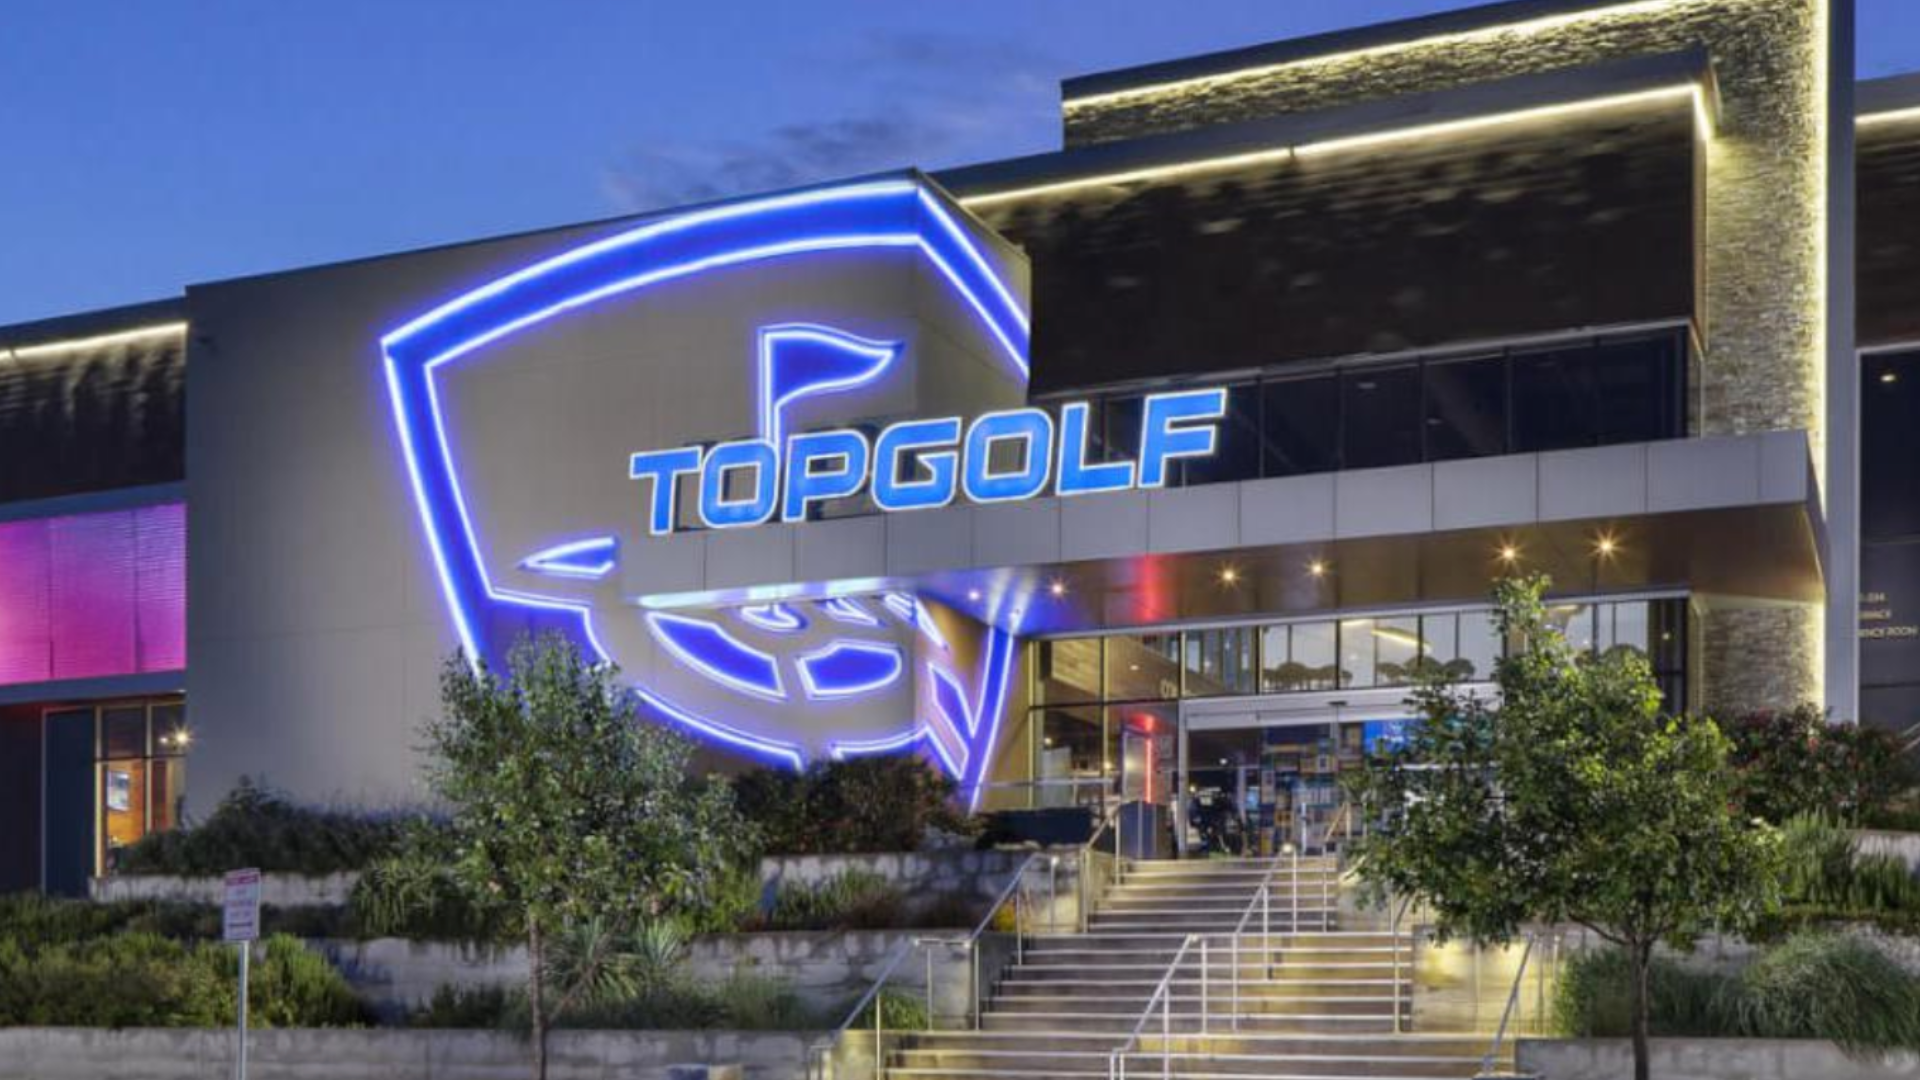 Topgolf - MGM Grand Las Vegas